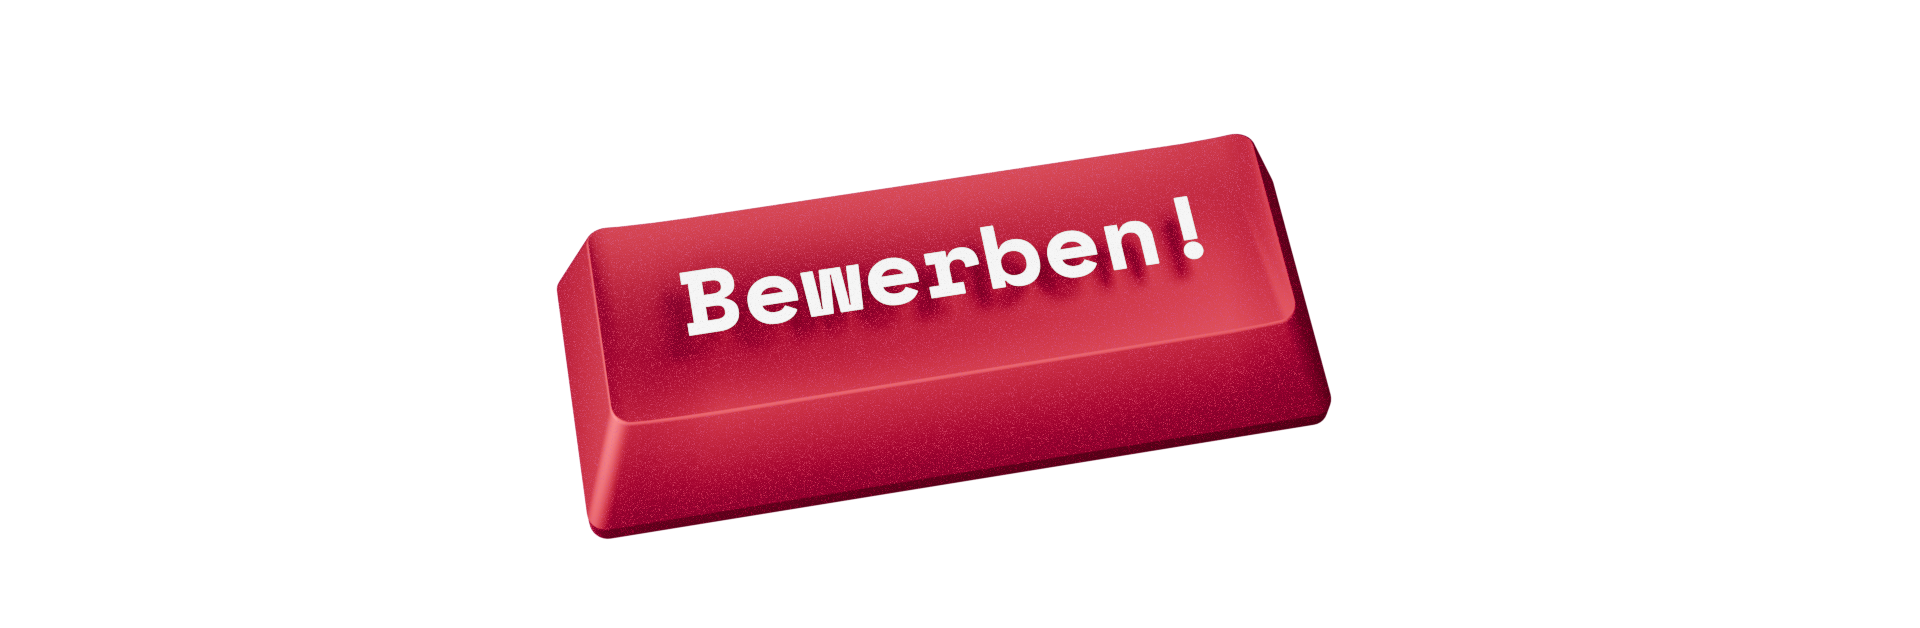 bewerben-button-grain2